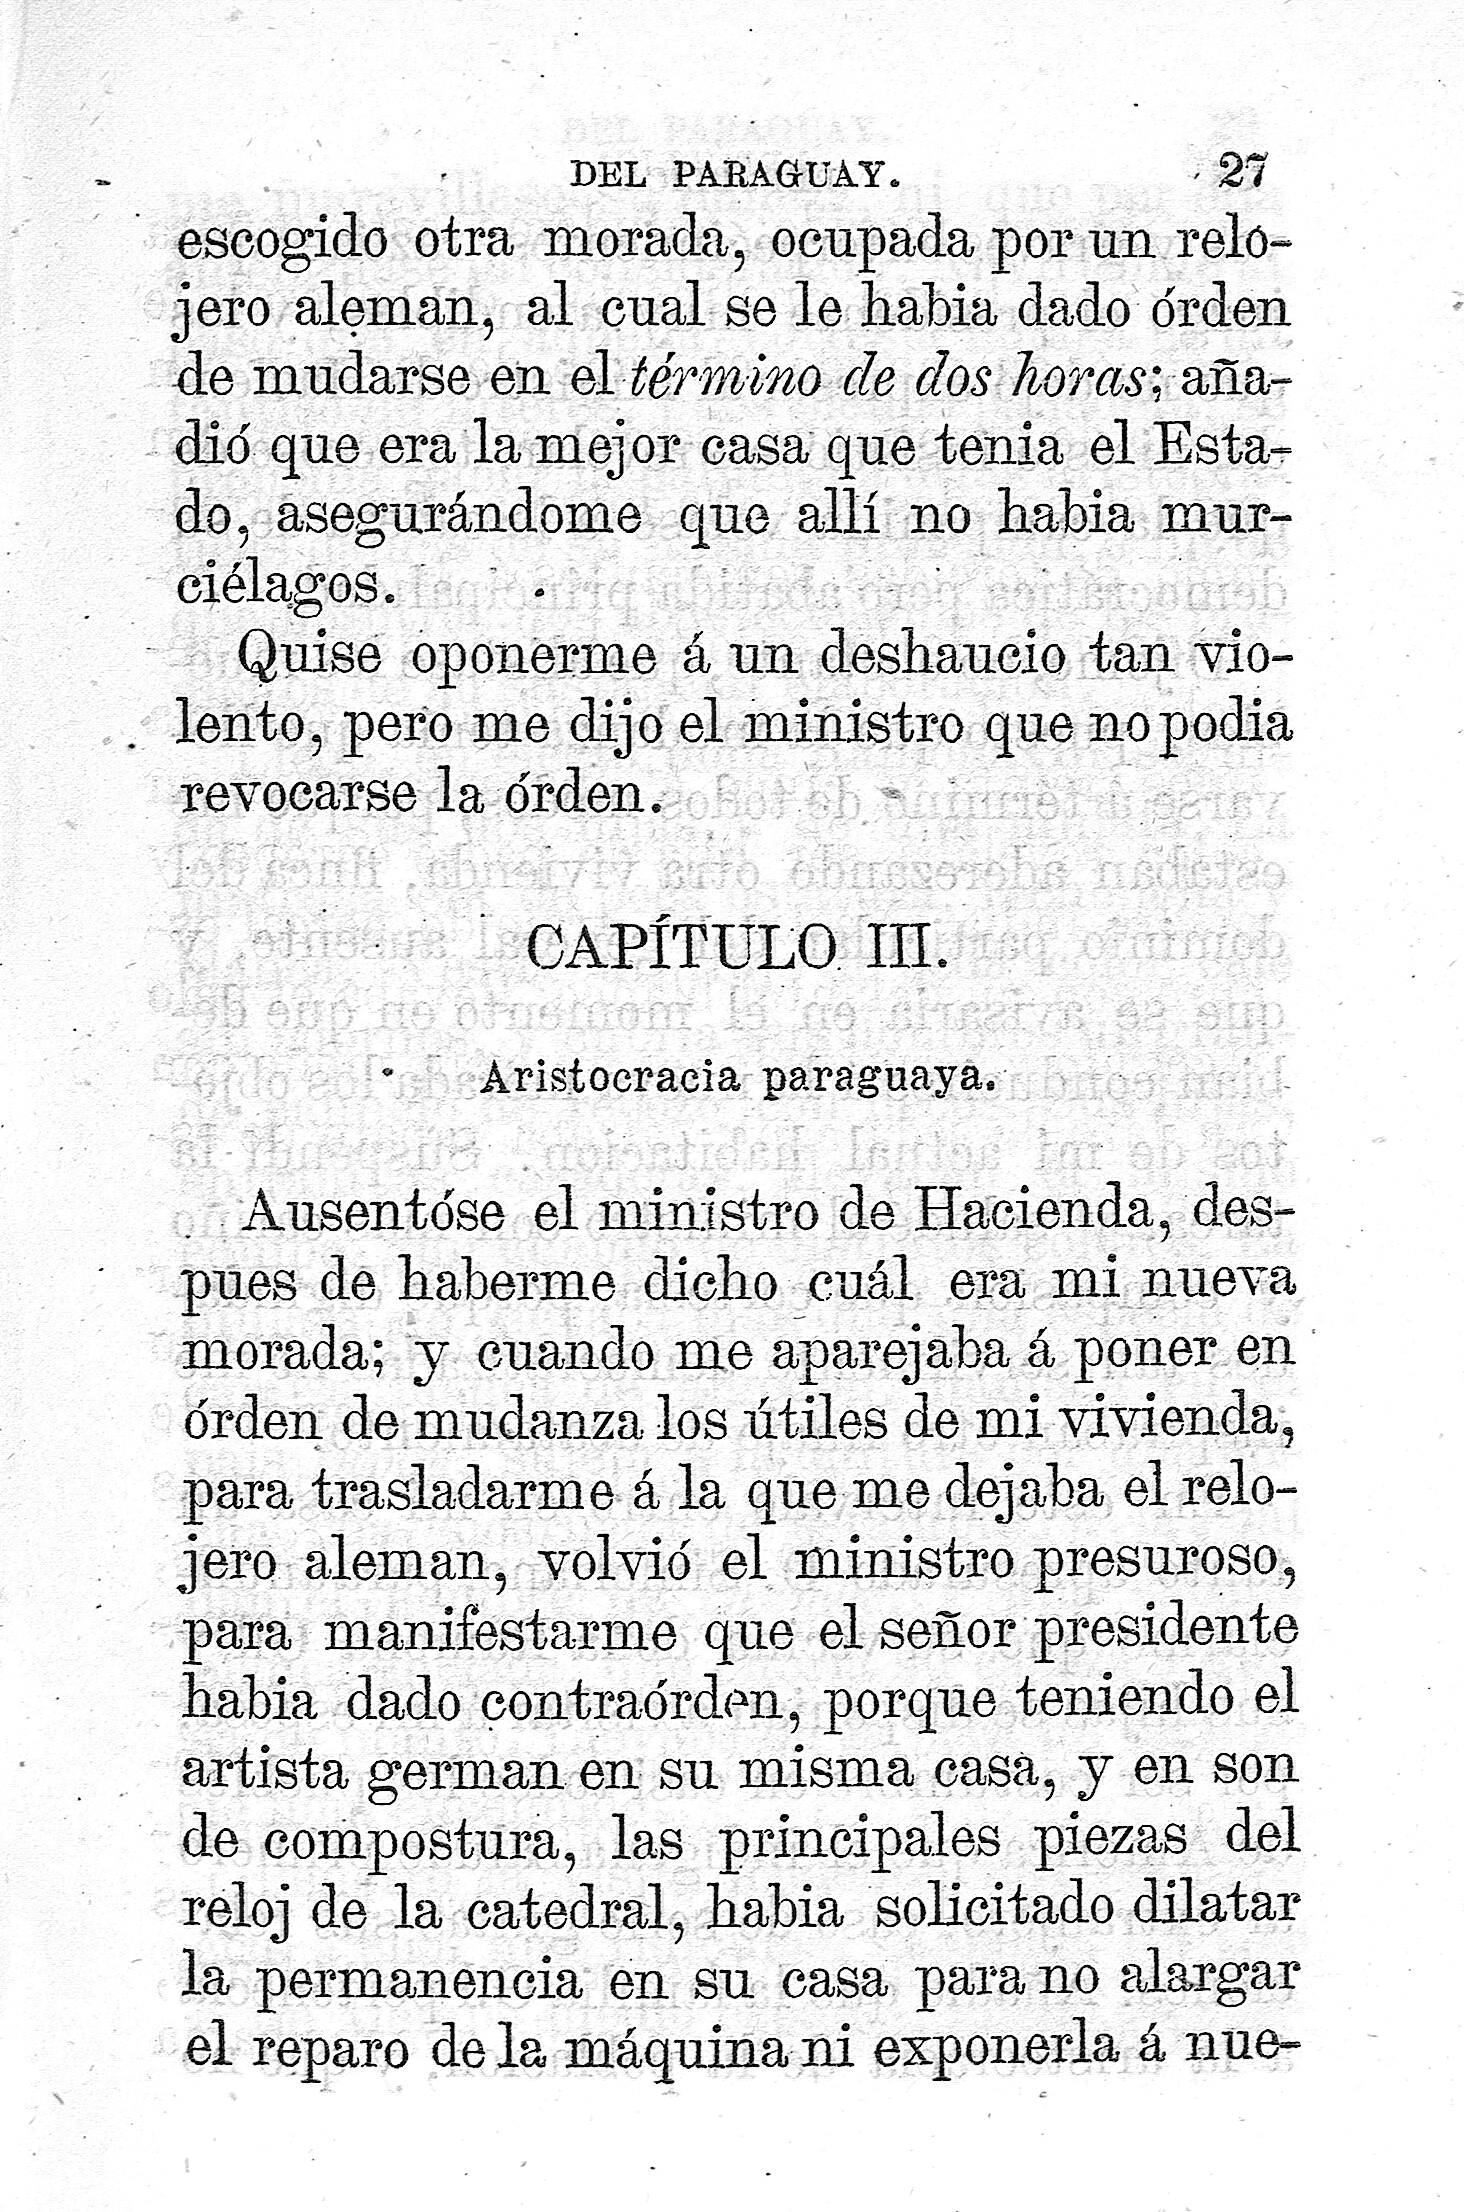 Capitulo III. Aristocracia paraguaya